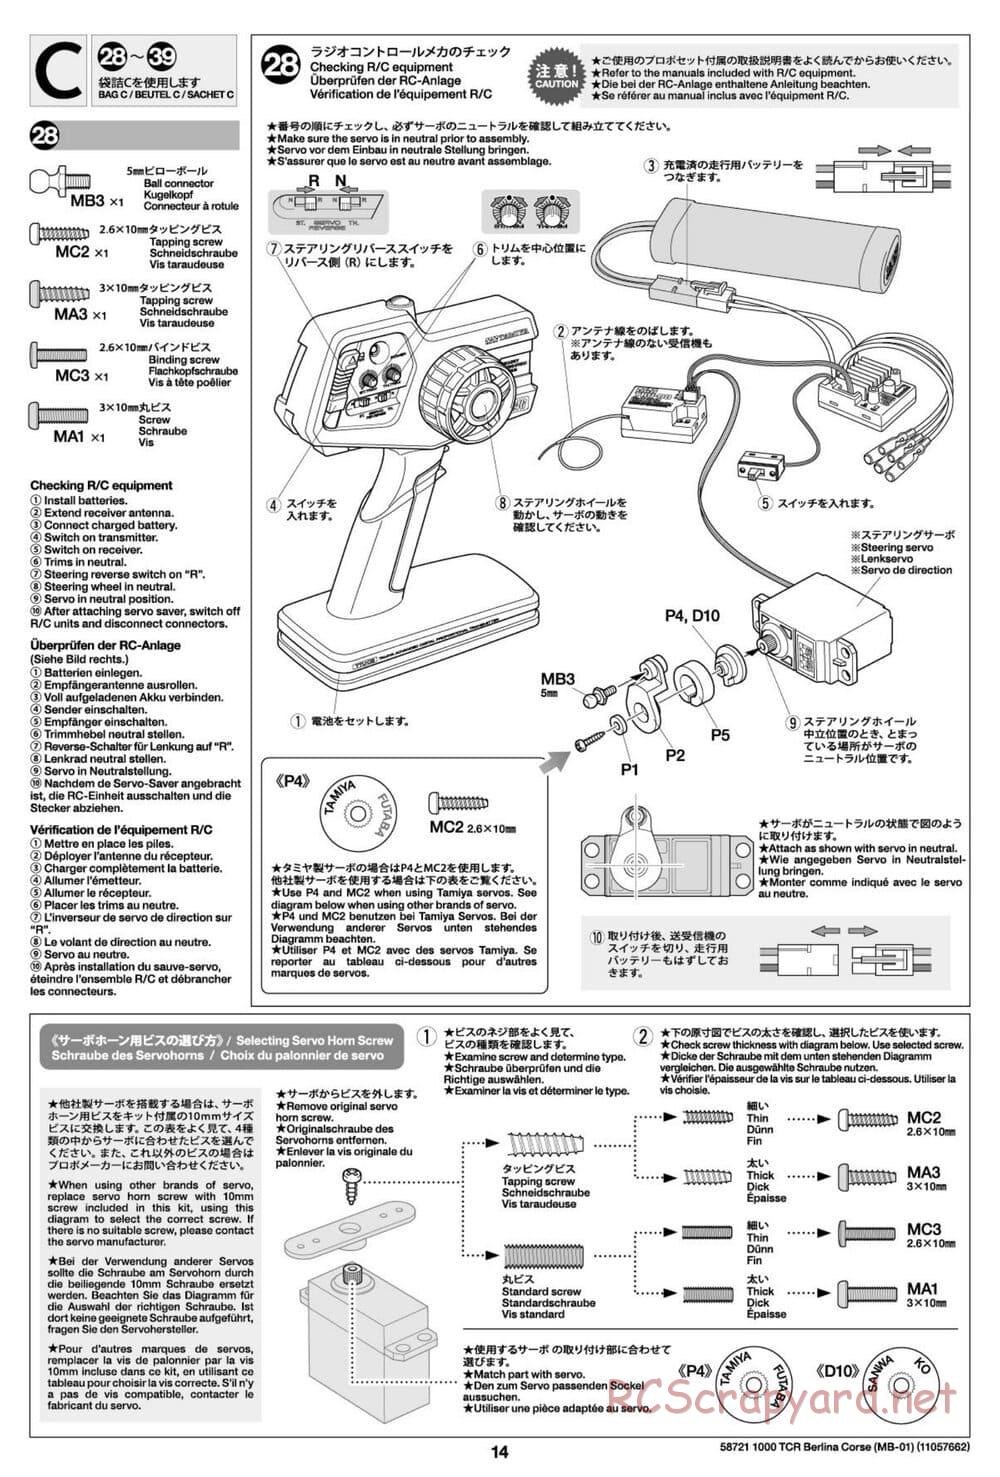 Tamiya - Fiat Abarth 1000 TCR Berlina Corsa - MB-01 Chassis - Manual - Page 14